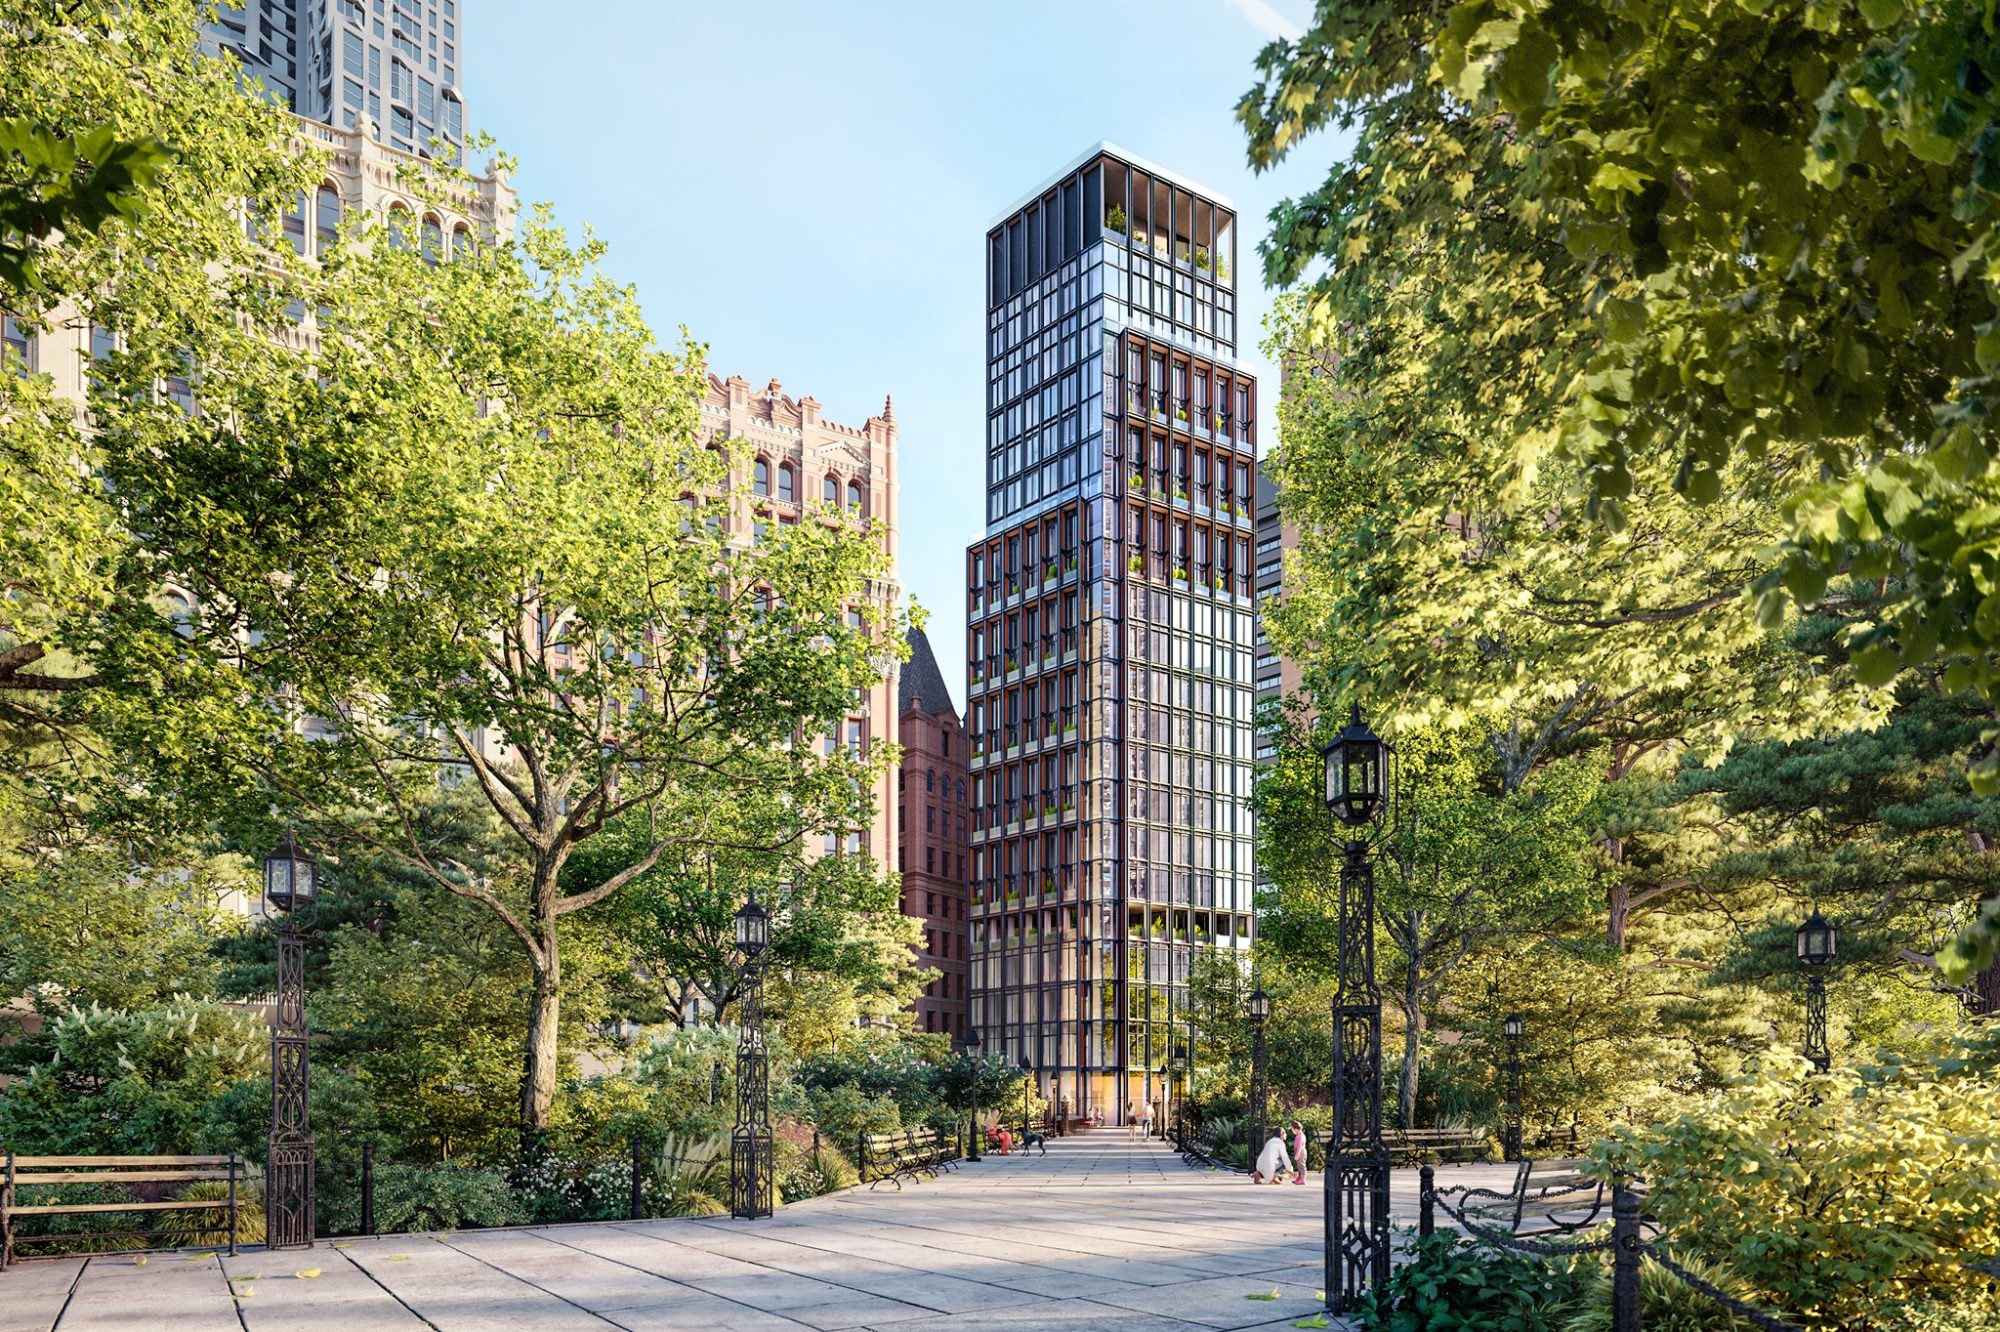 N°33 Park Row is an architectural landmark redefining Downtown Manhattan